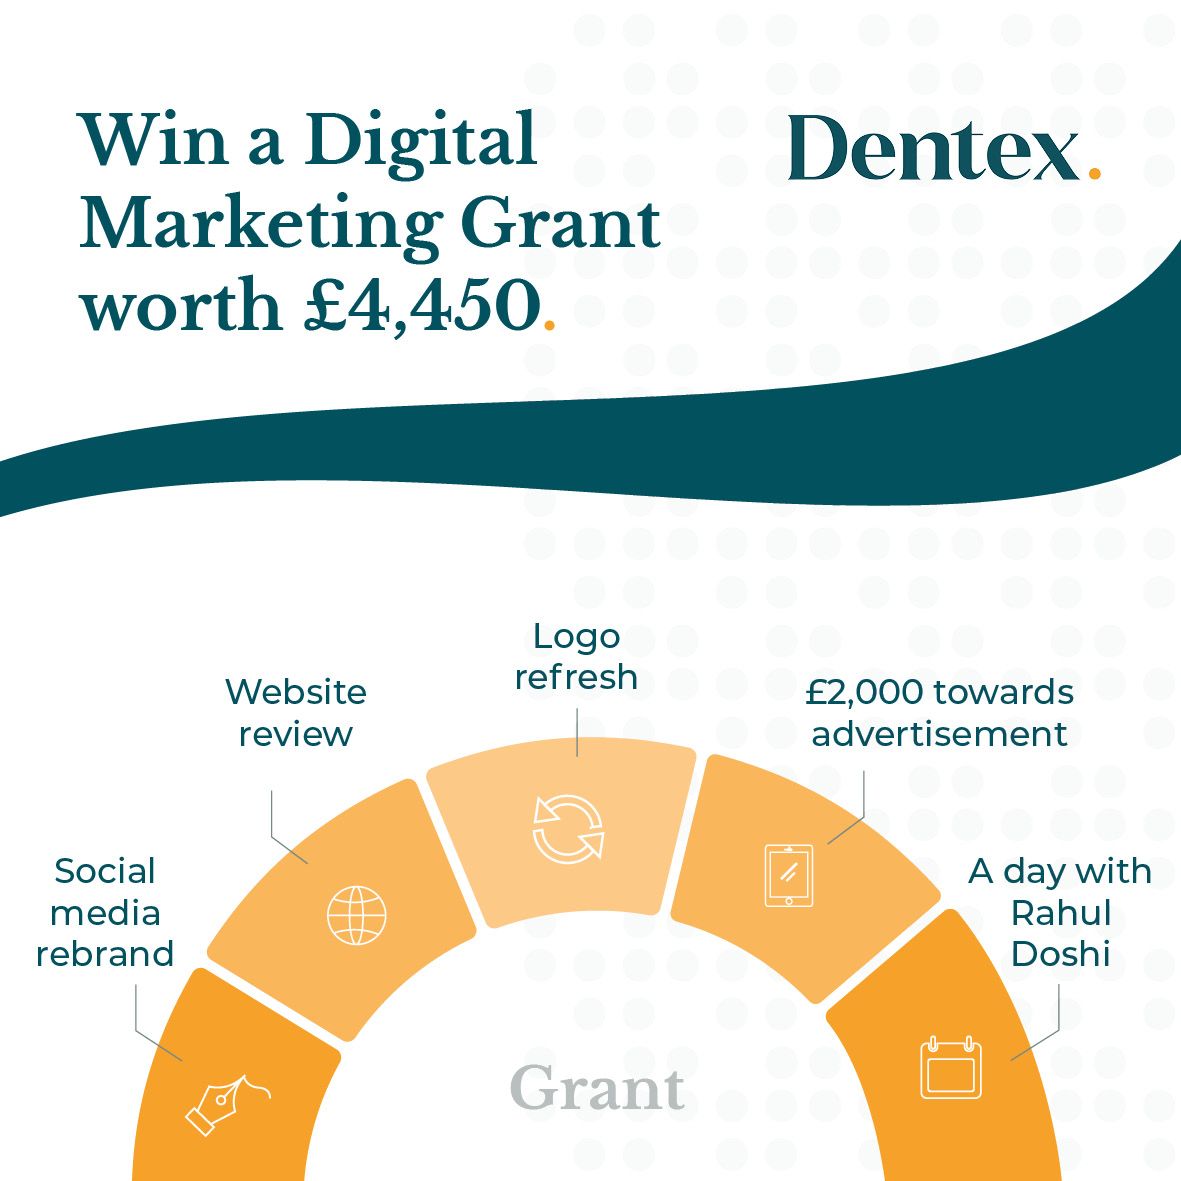 Win Dentex's Digital Marketing Grant worth £4,450.